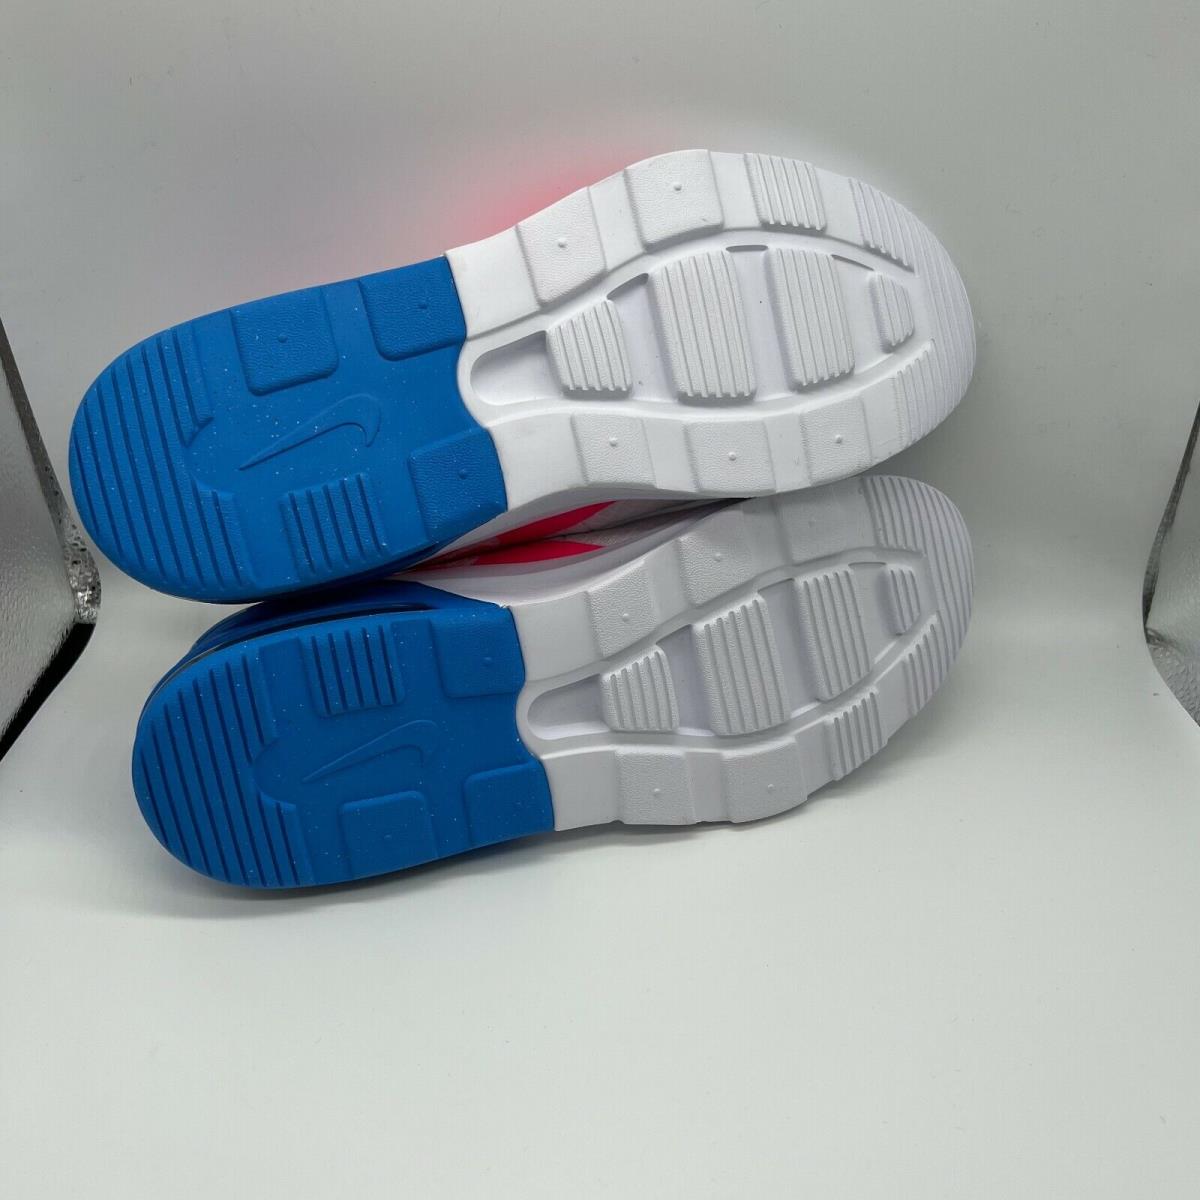 Nike shoes Sneaker Shoes - Multicolor 4